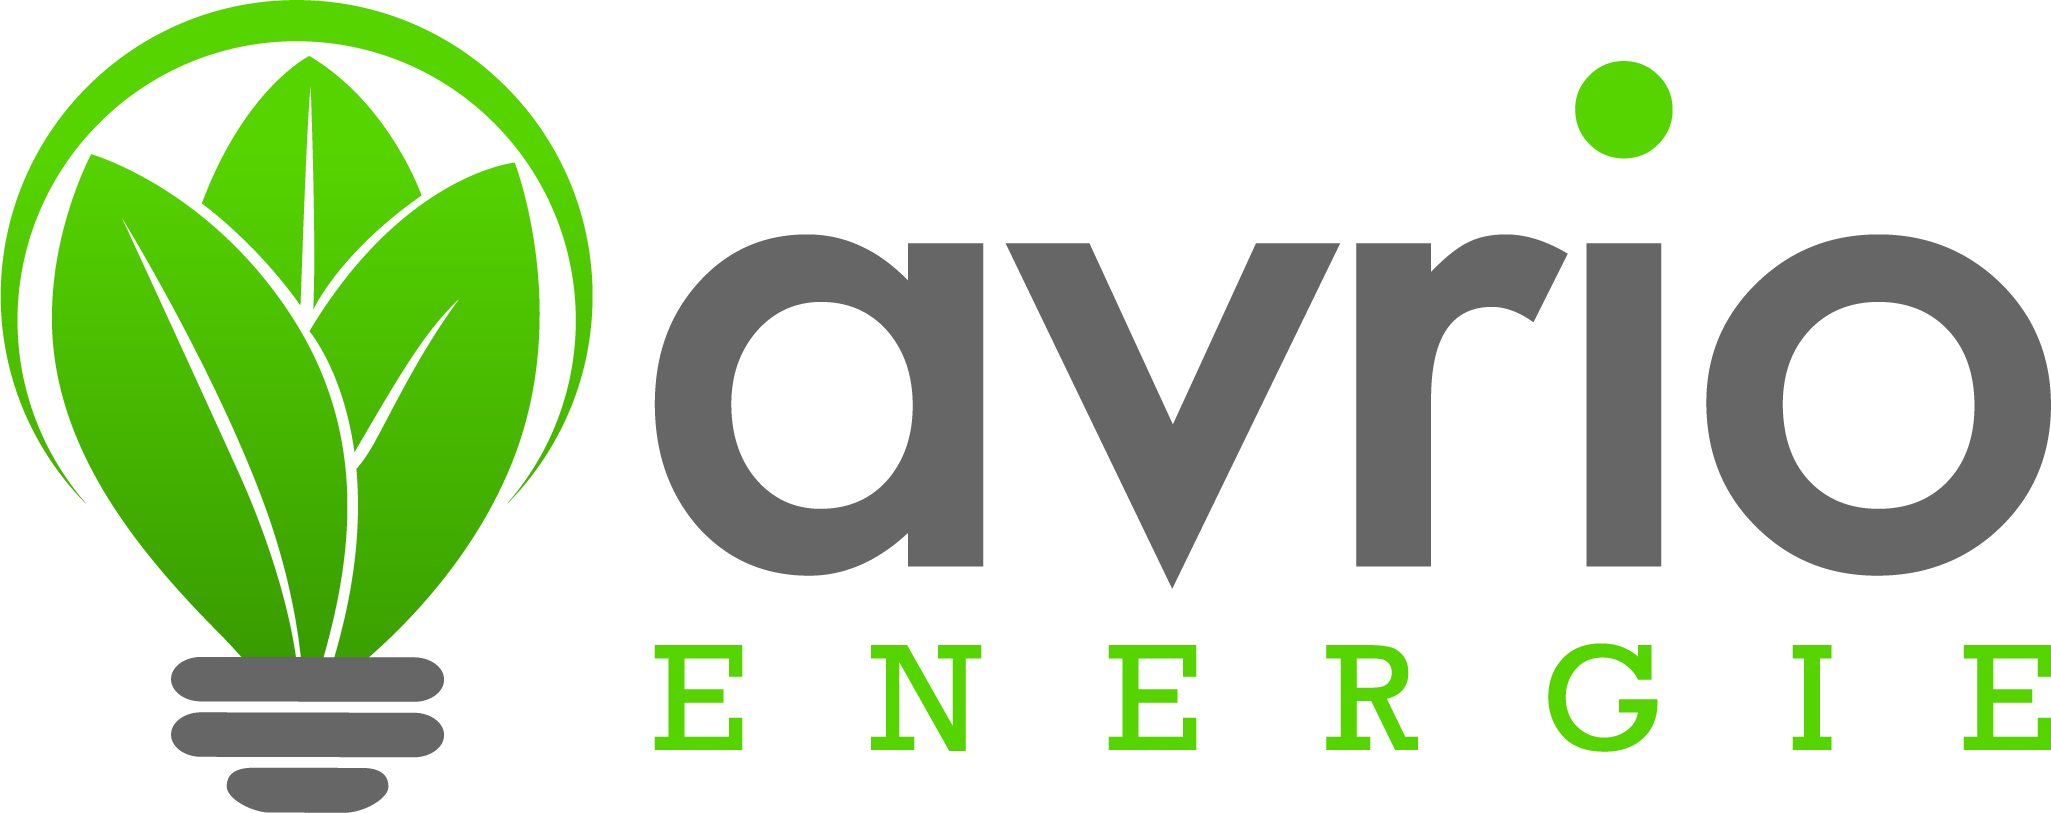 AVRIO Energie GmbH